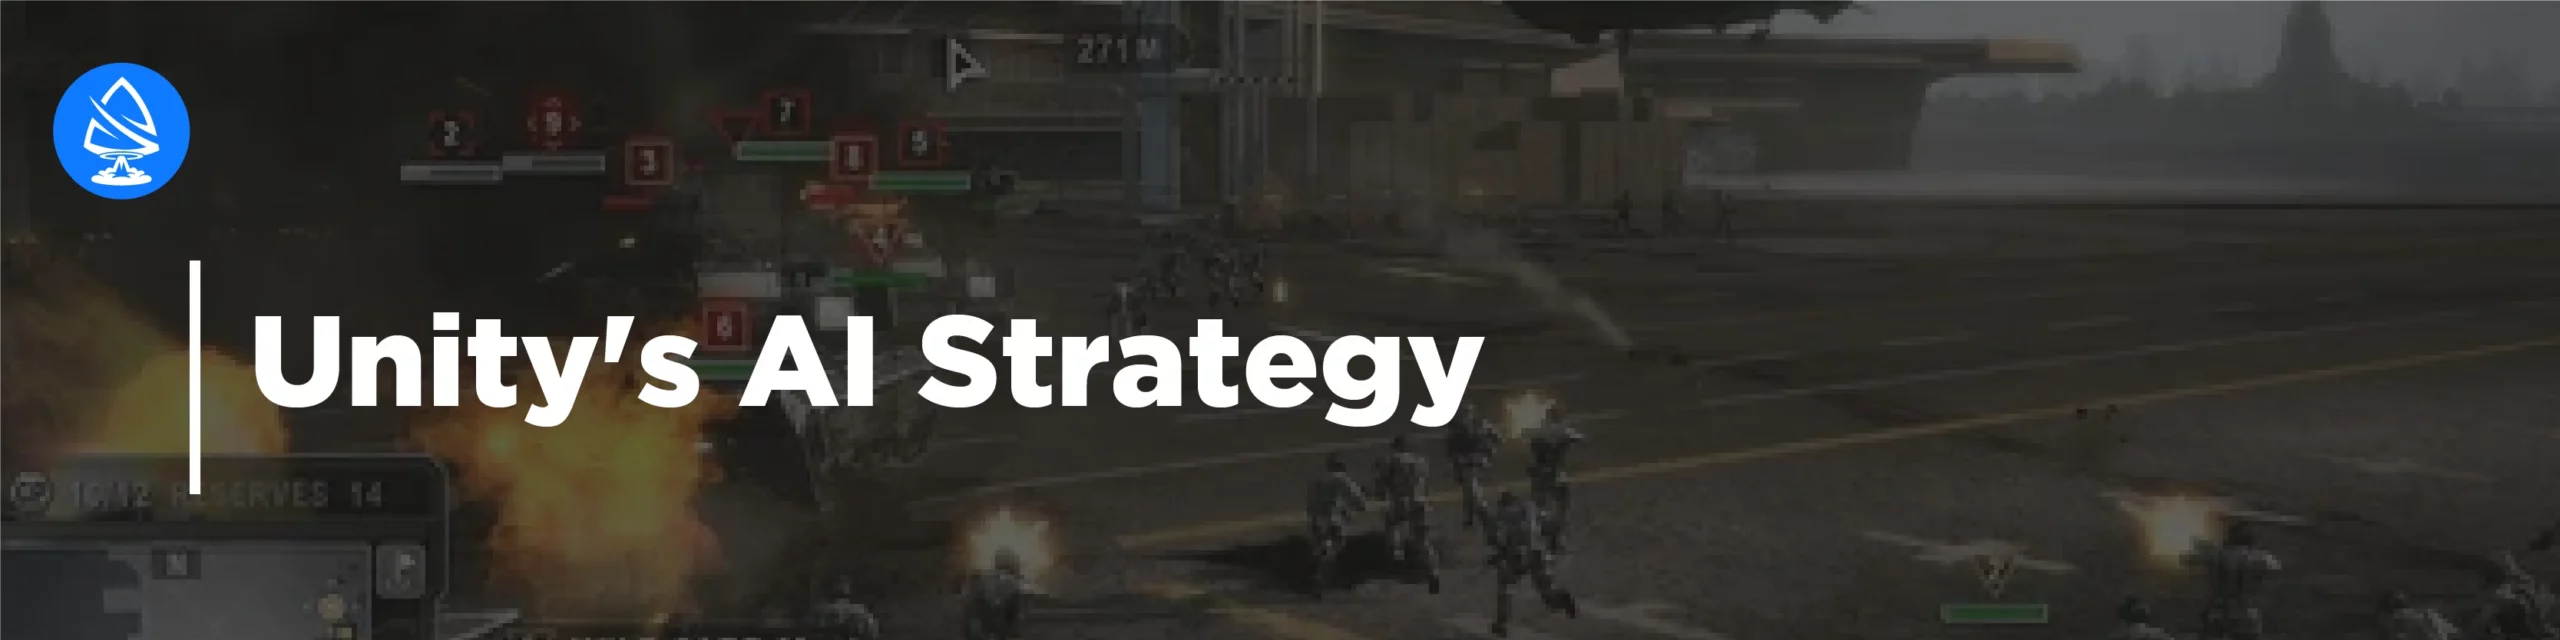 Unity's AI Strategy